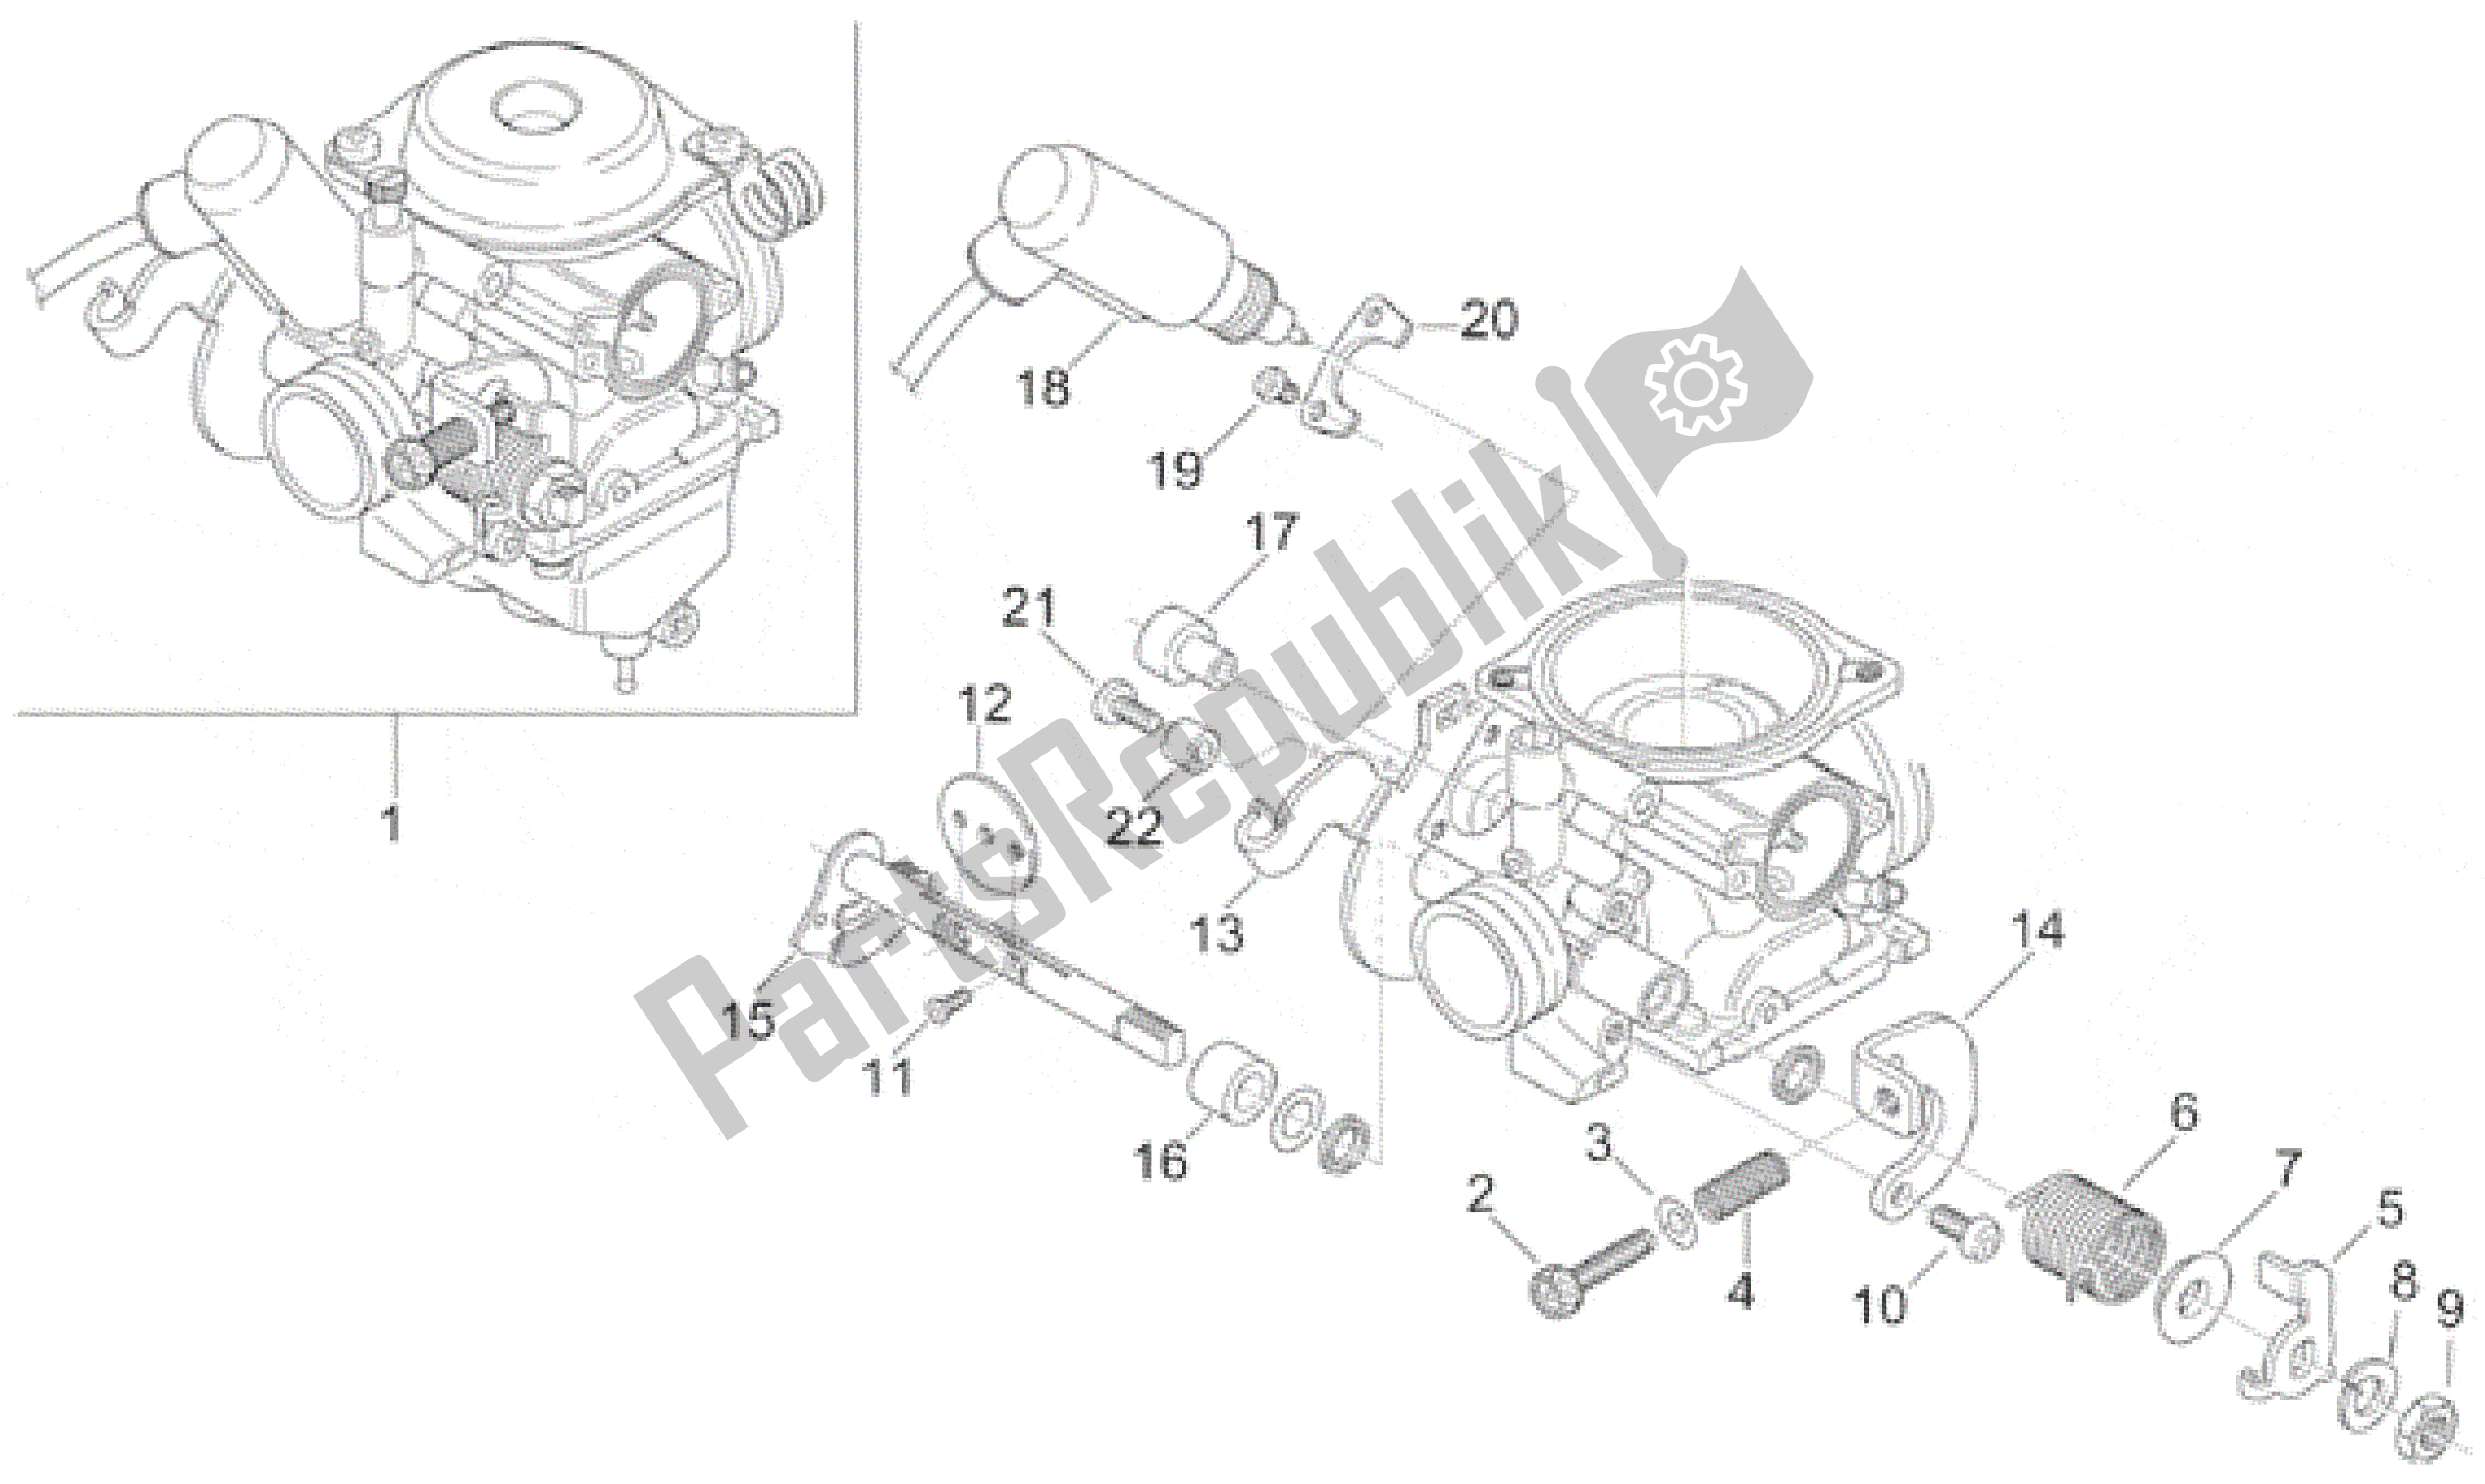 All parts for the Carburettor Ii of the Aprilia Leonardo 125 1996 - 1998